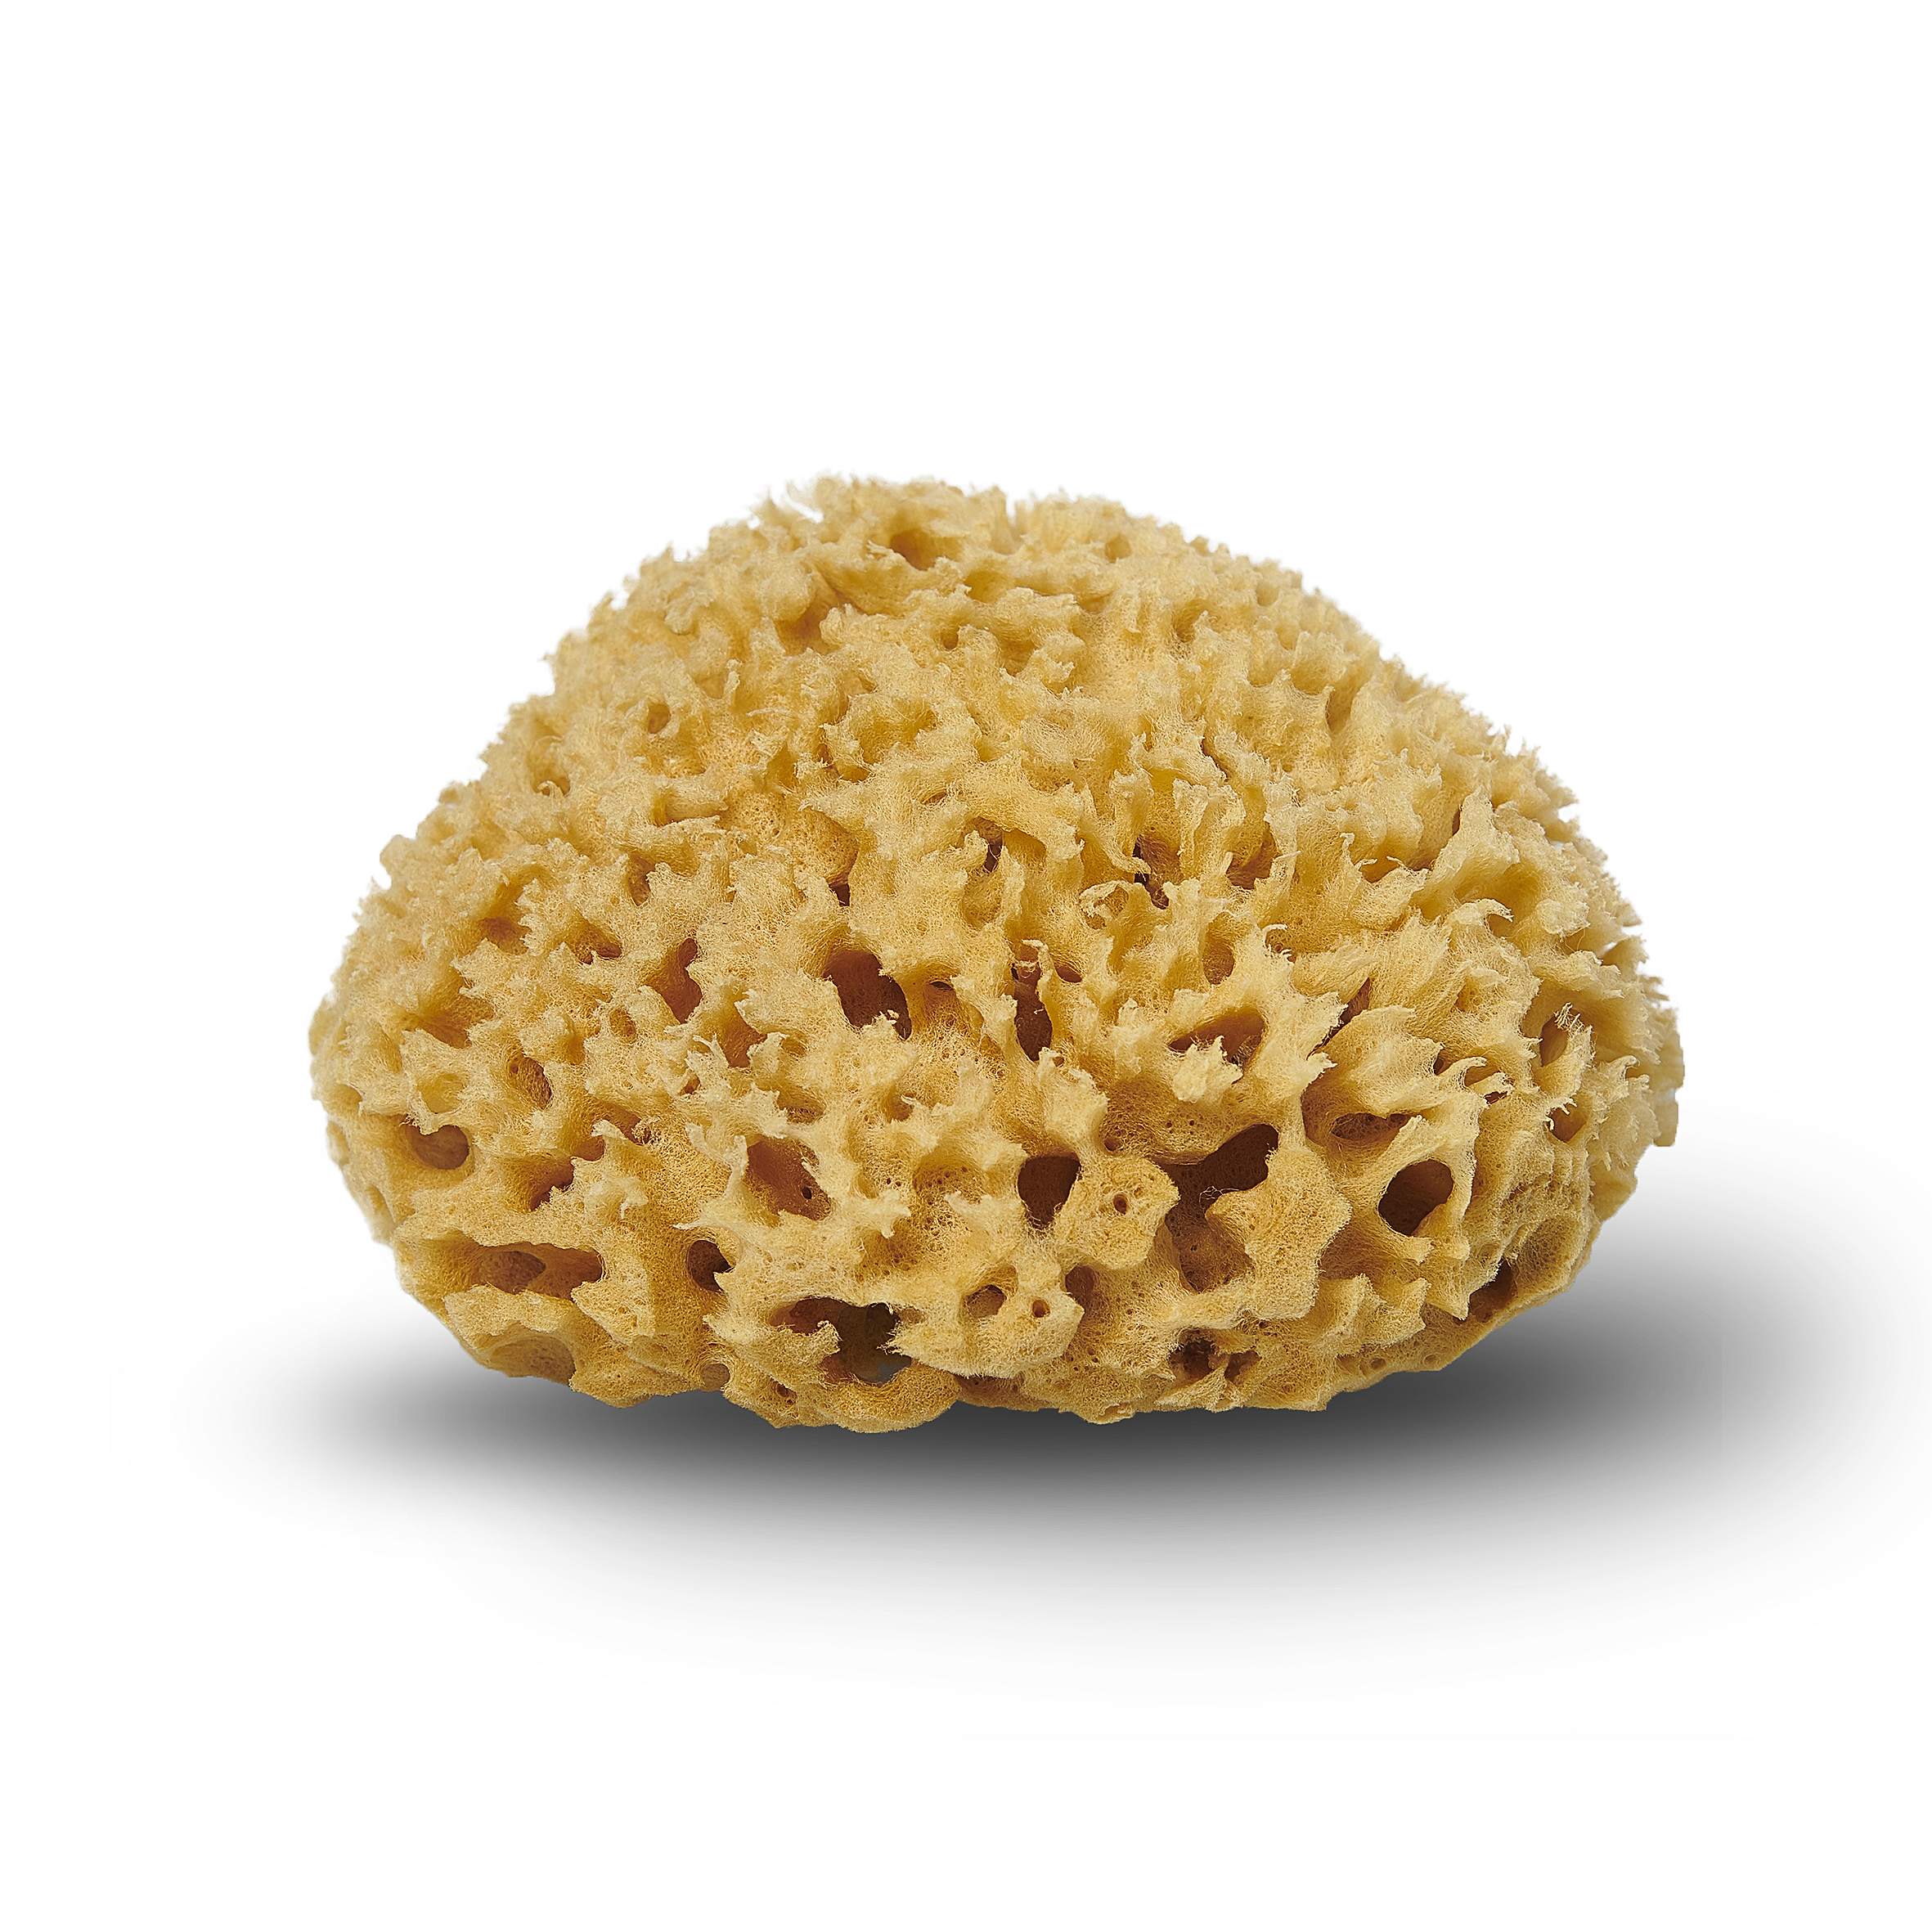 What is a Mediterrean Sea sponge?